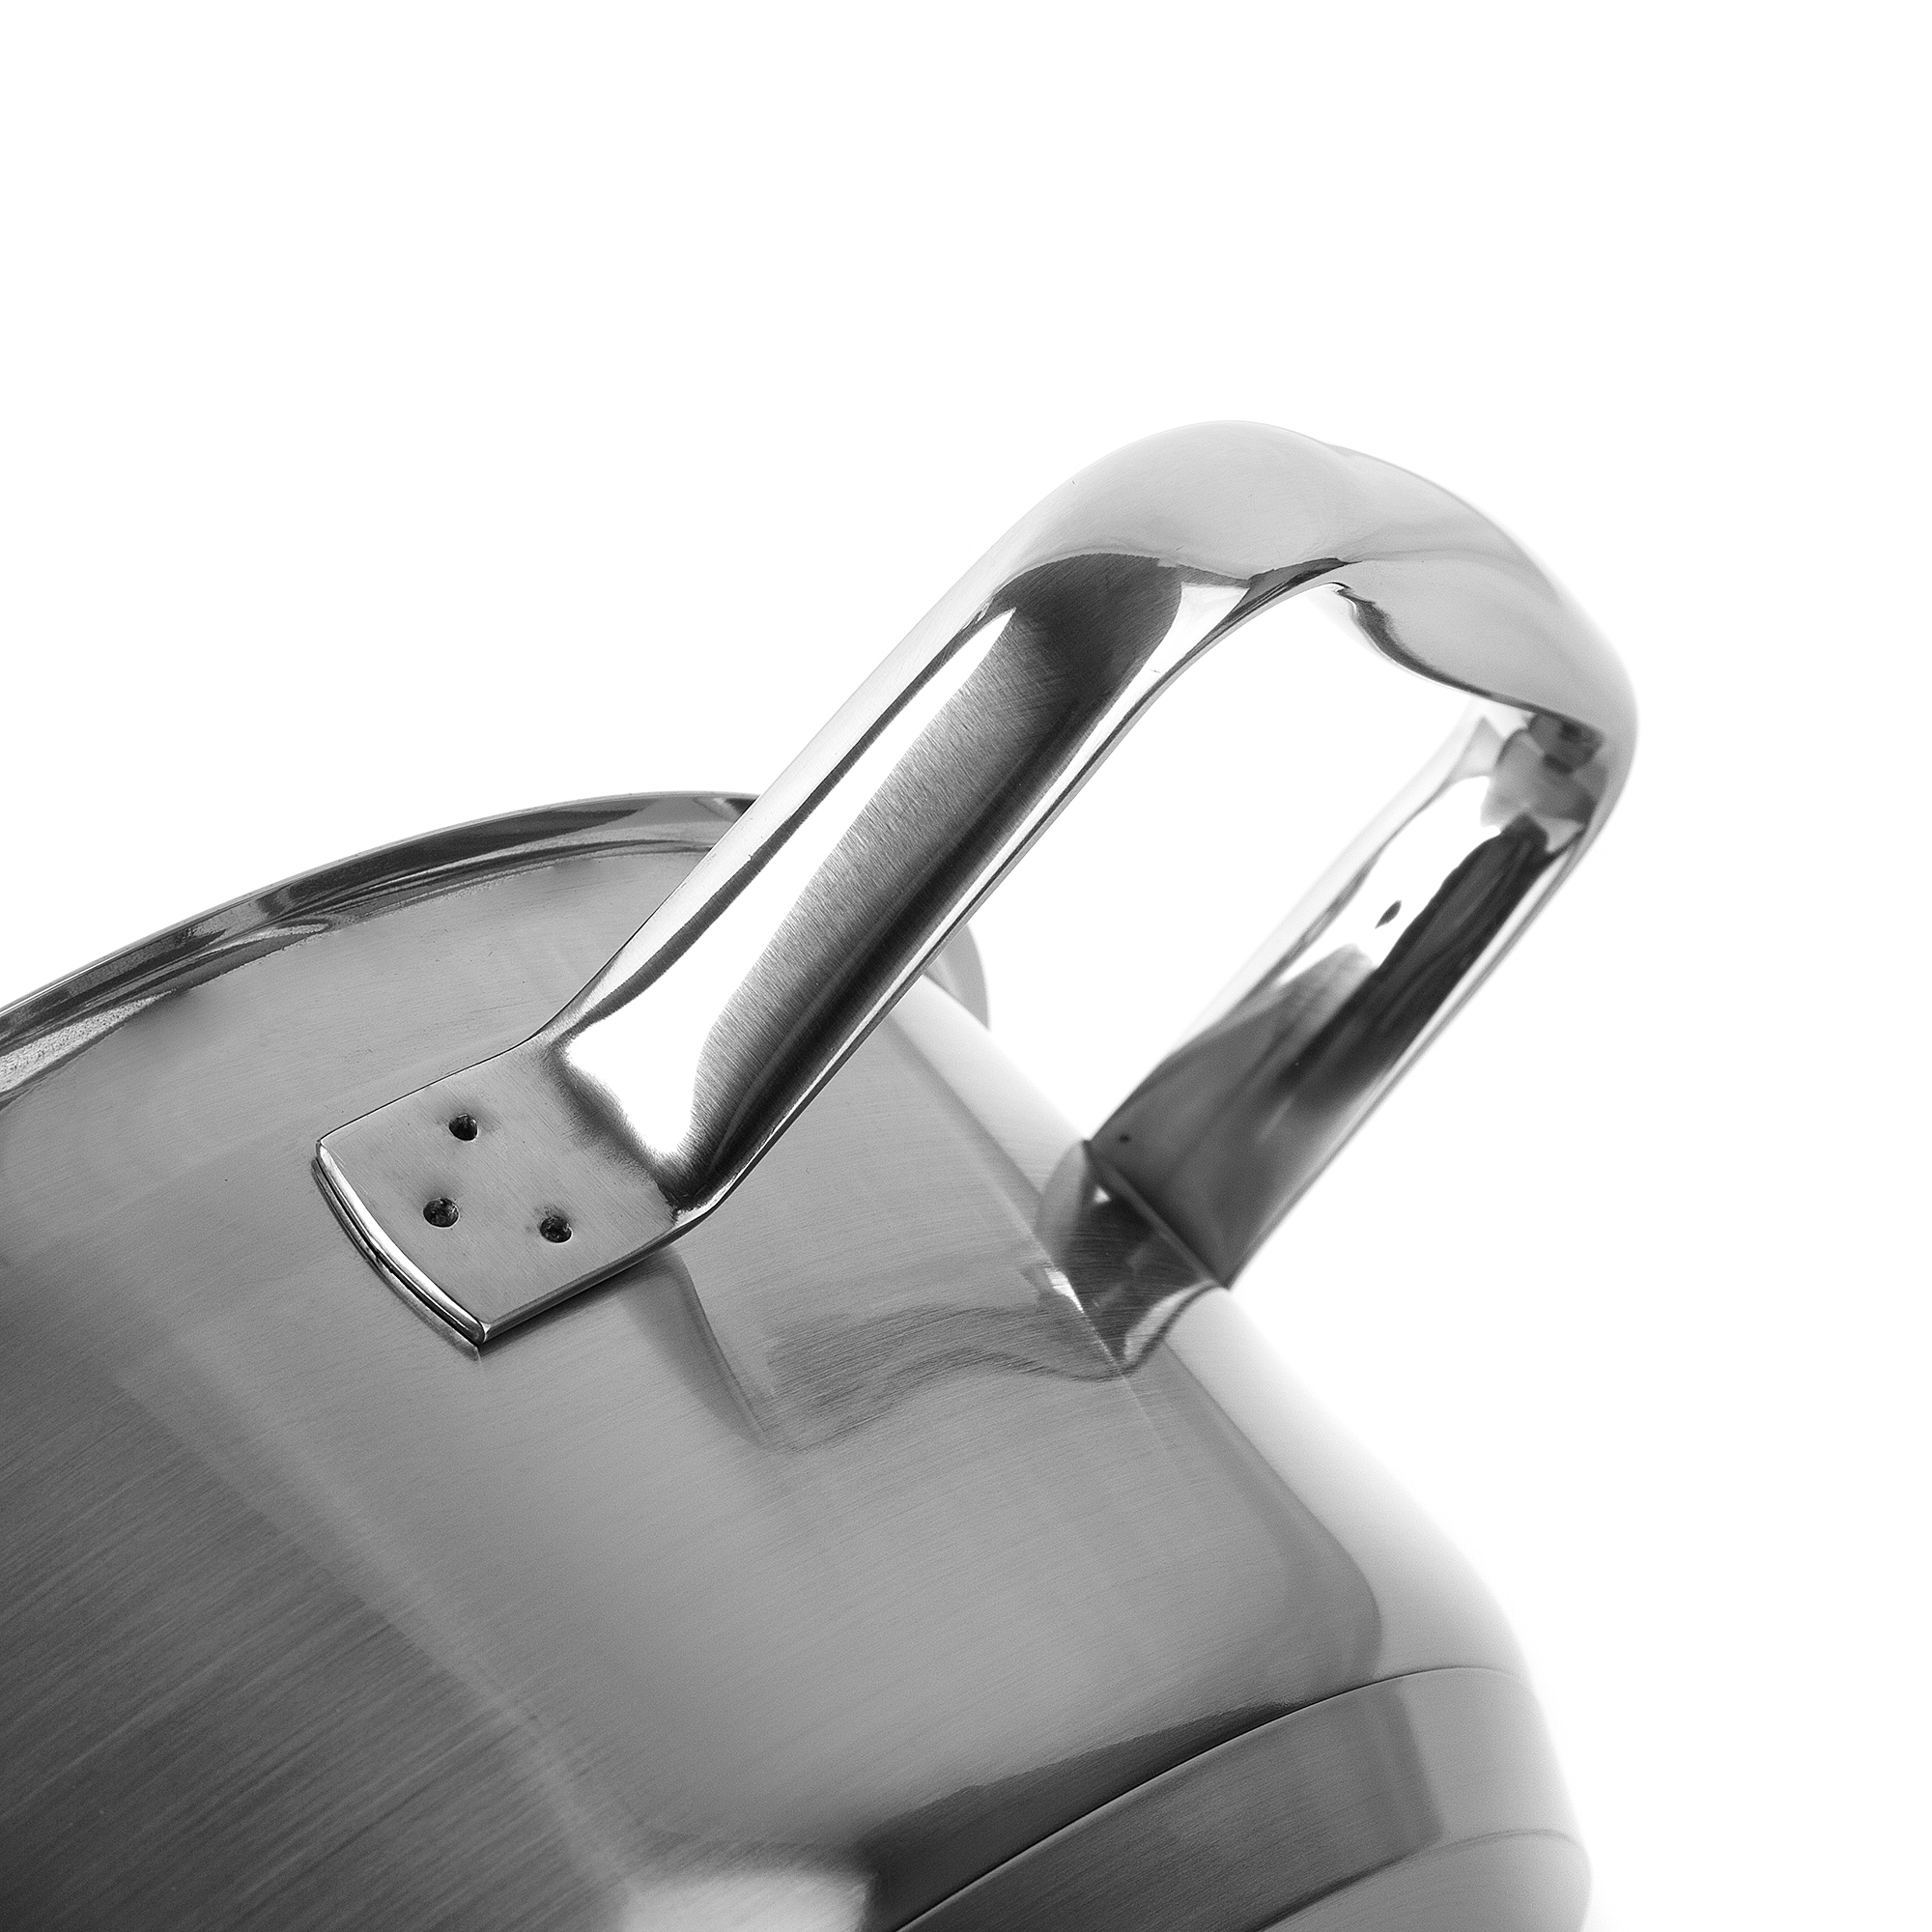 Кастрюля с крышкой Roesle Charm диаметр 16 см 1,9 л, цвет серебристый - фото 7